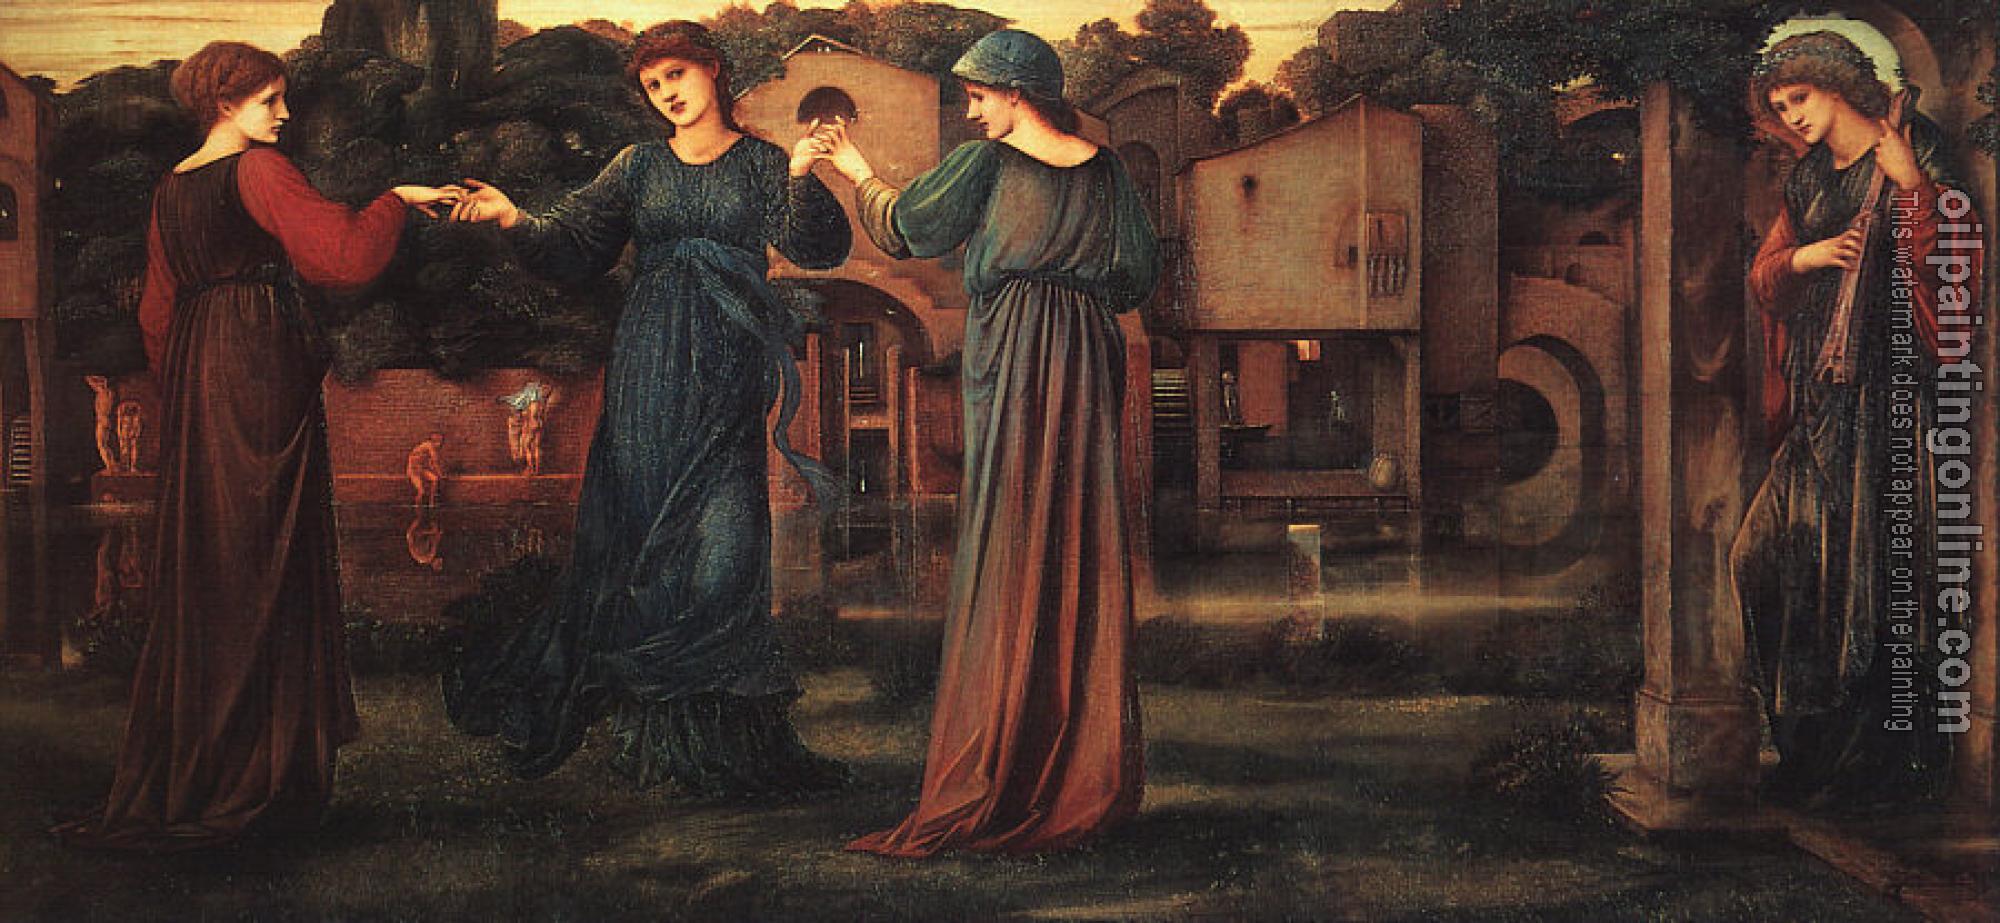 Burne-Jones, Sir Edward Coley - The Mill